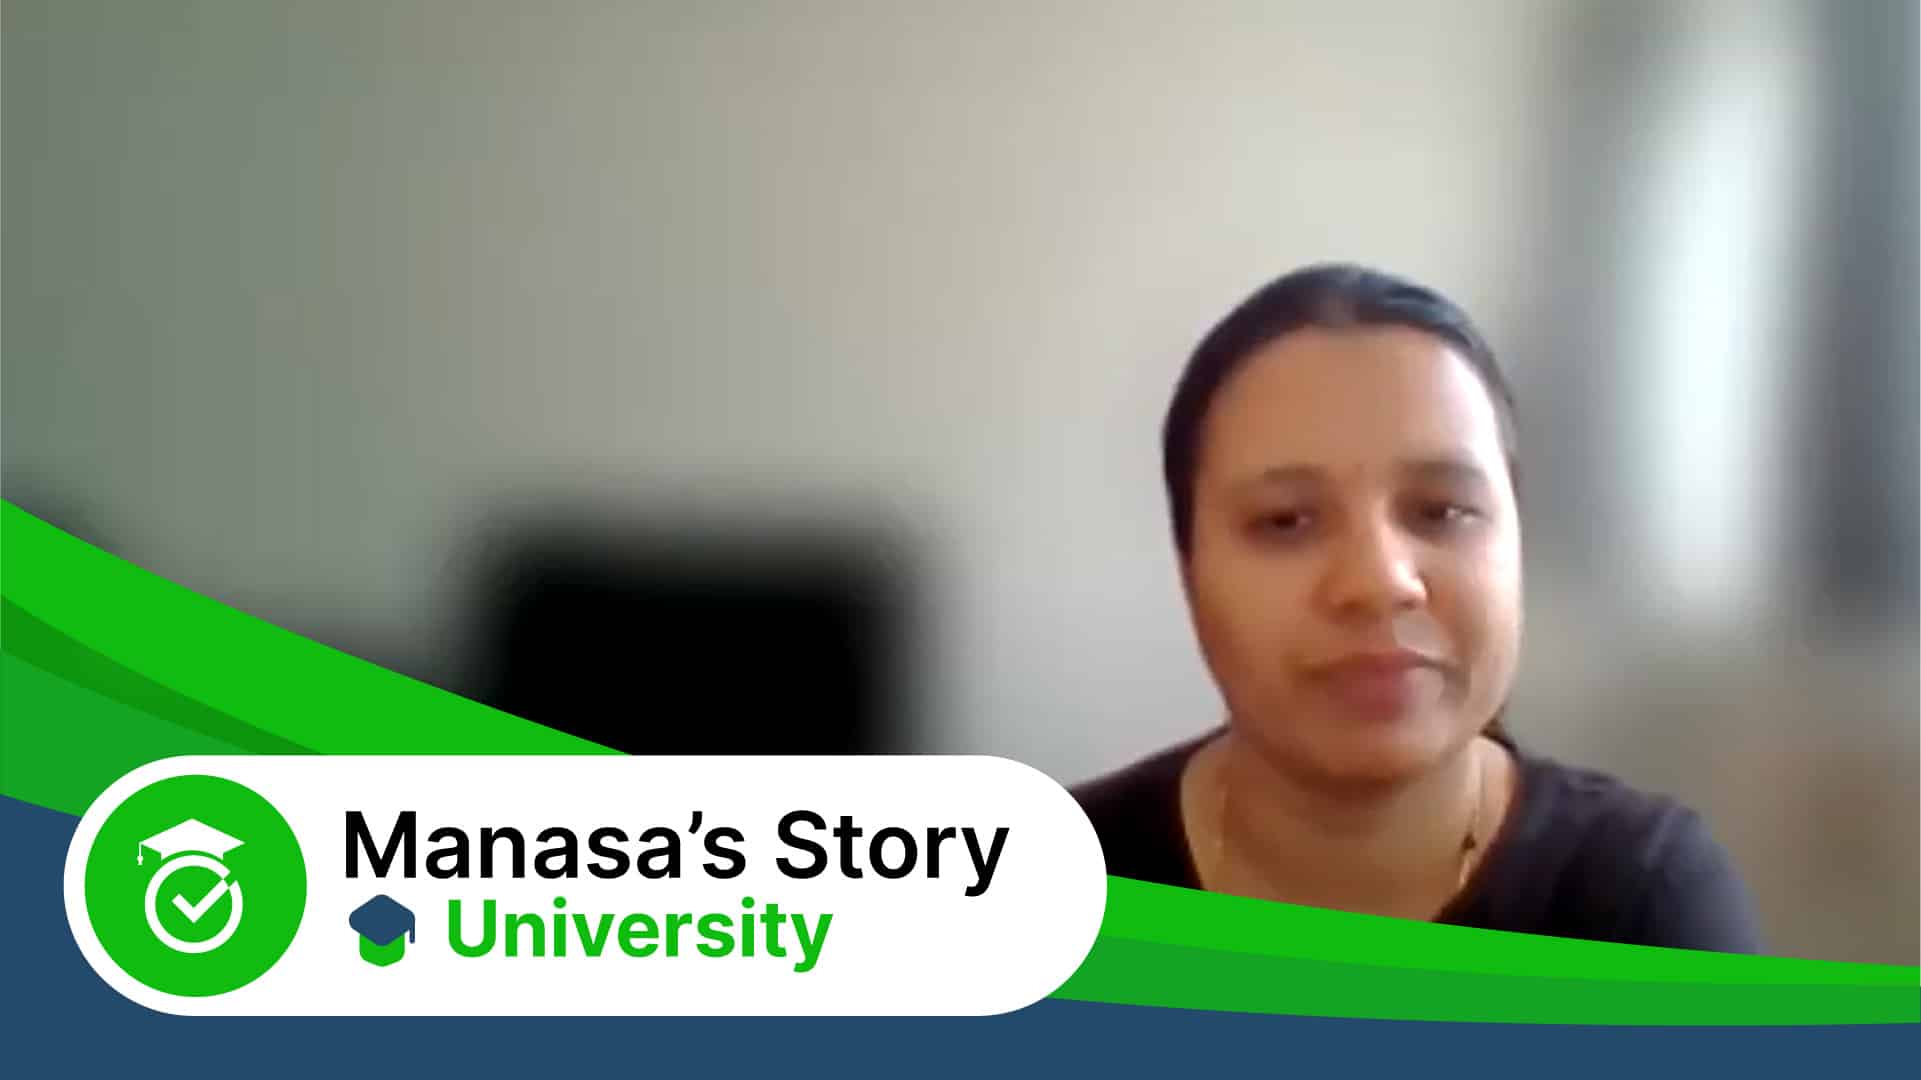 Manasa's Story: Getting into Teaching testimonial